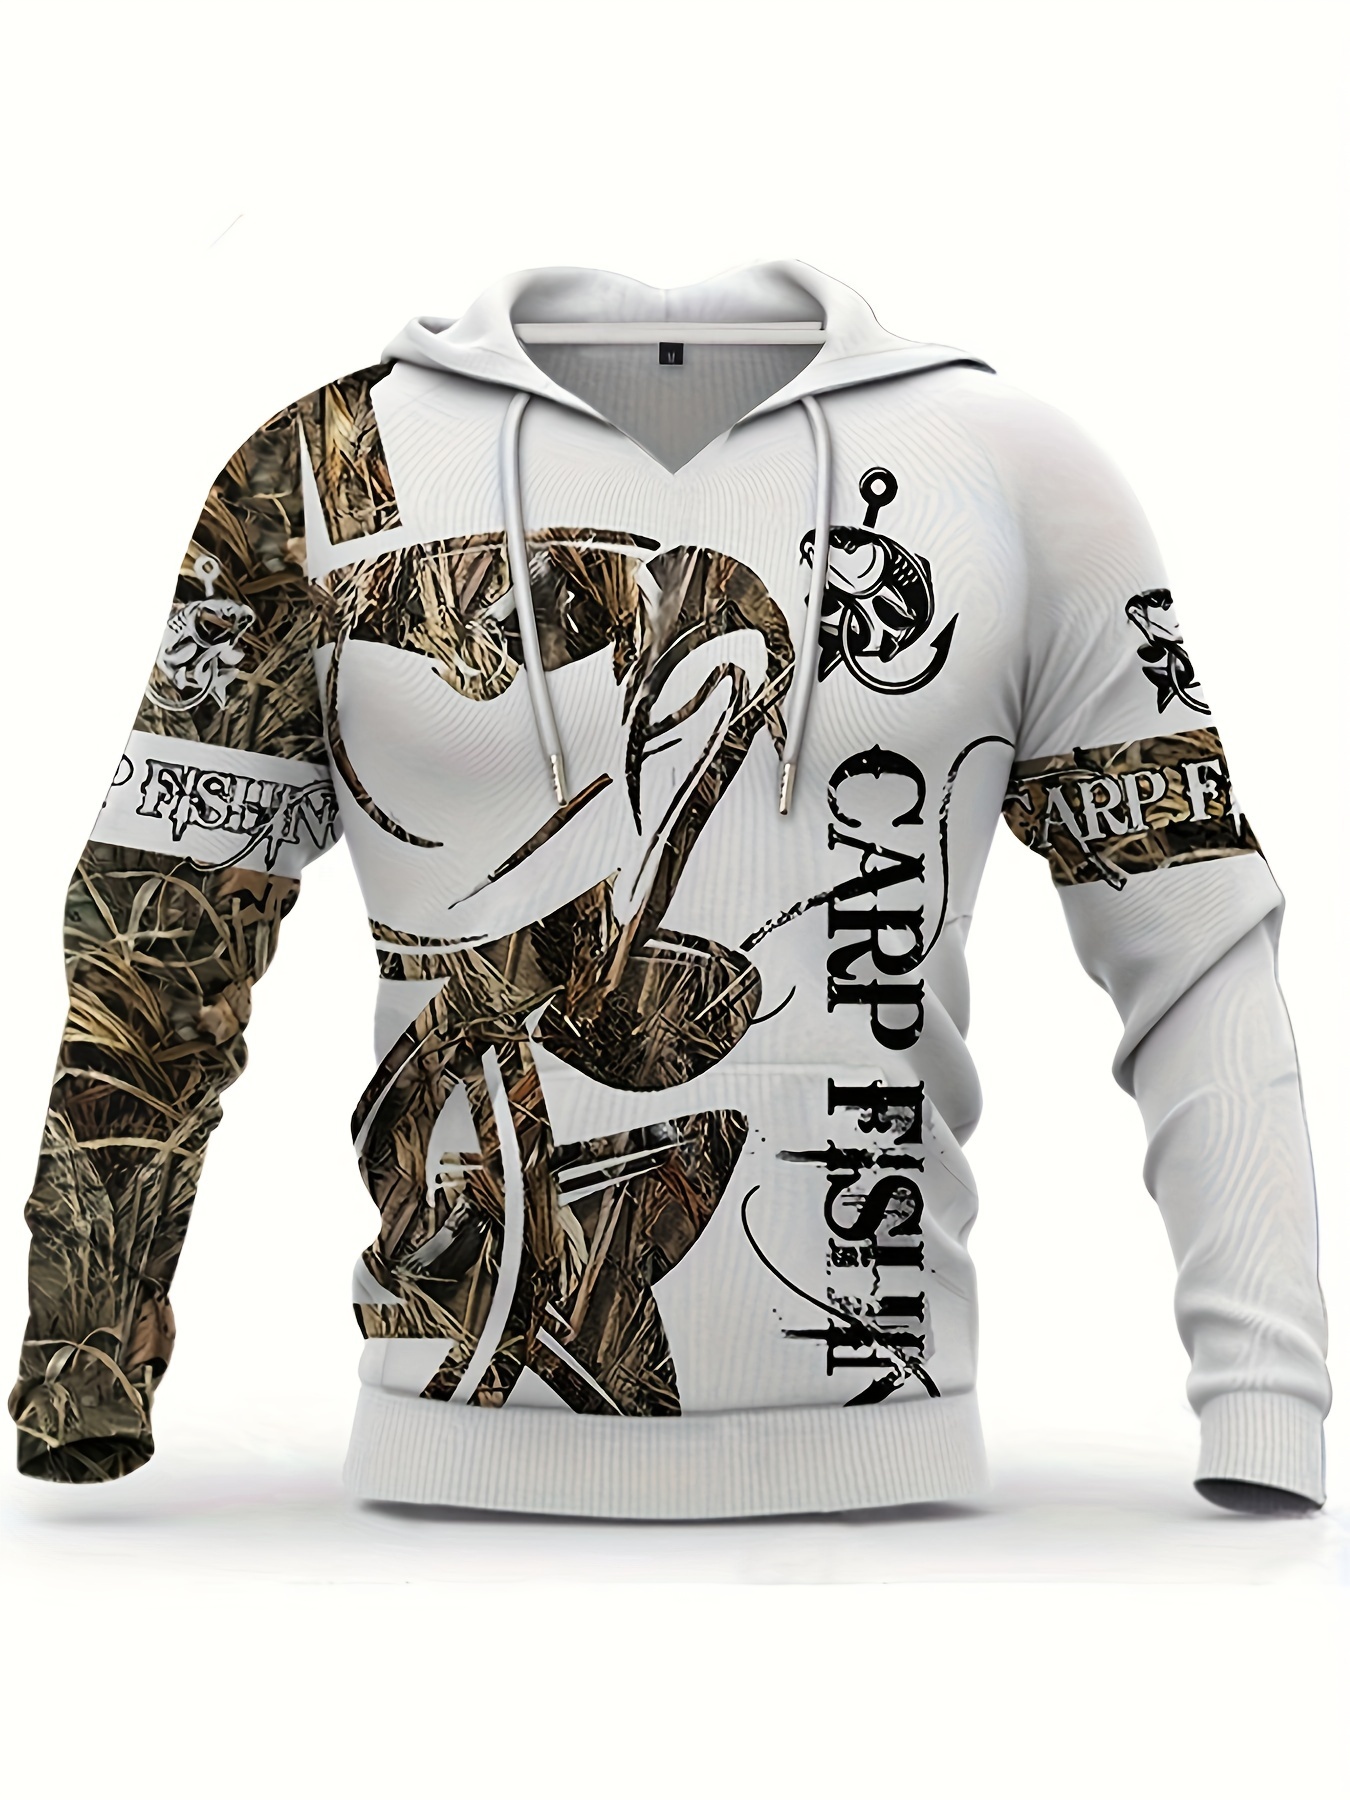 The new 3D print Carp Fishing Hunter Short Sleeve Sweater fishing gear  Hoodie Pullover Beach Pant Fish scale T-shirt Sportswear